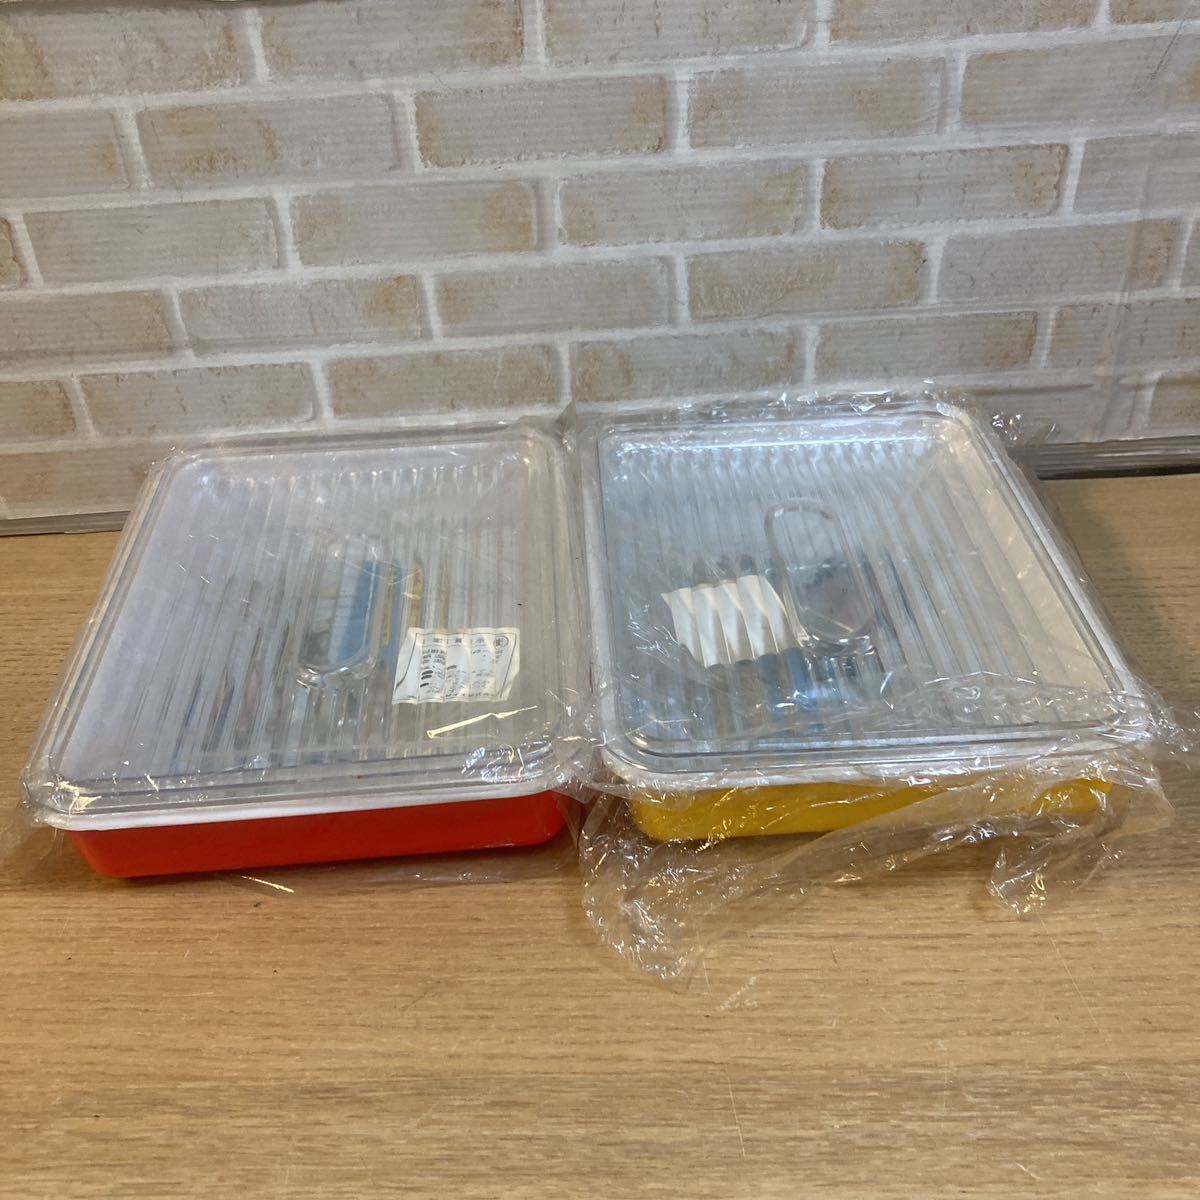 DE-603【保管品】昭和レトロ サンバット 赤、黄色 二つまとめて 天ぷら 鍋物 材料入れ 容器_画像8